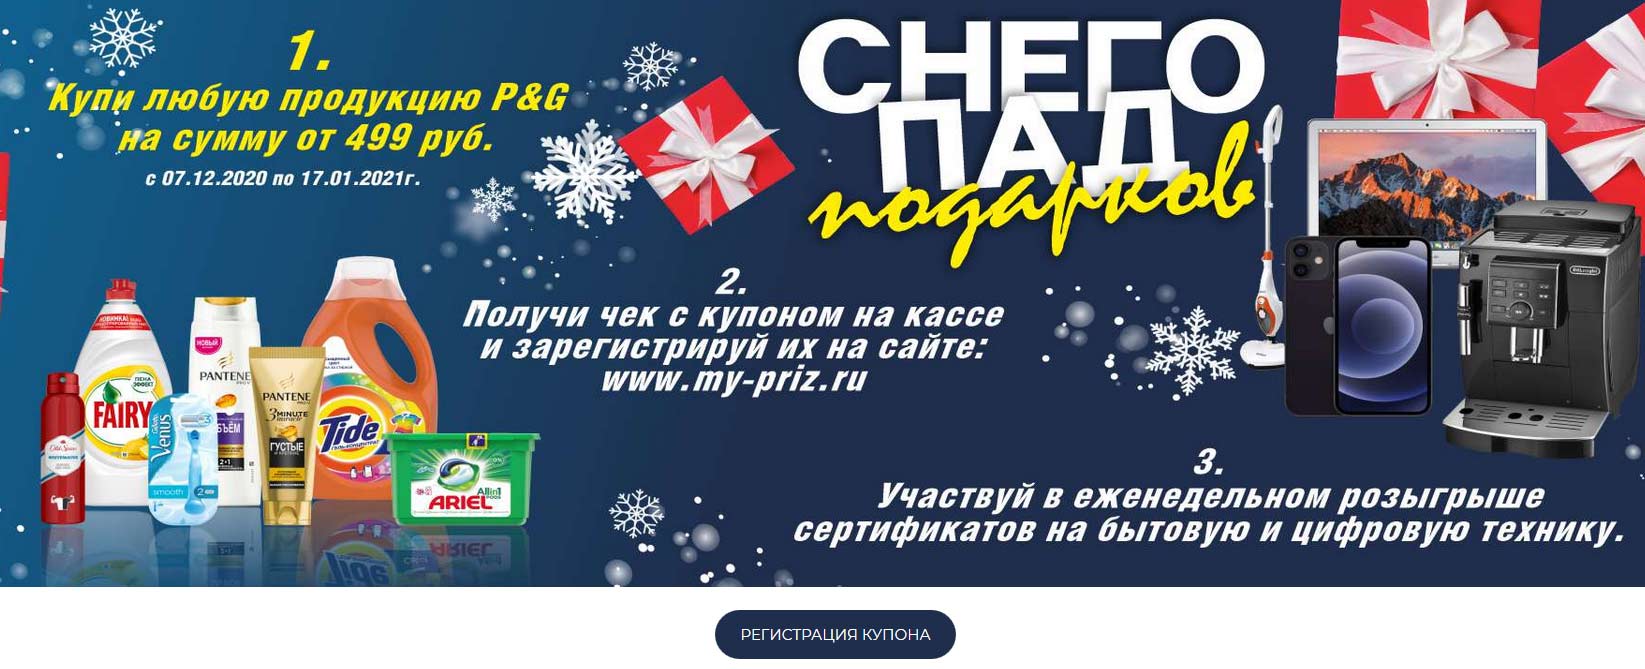 my-priz.ru регистрация 